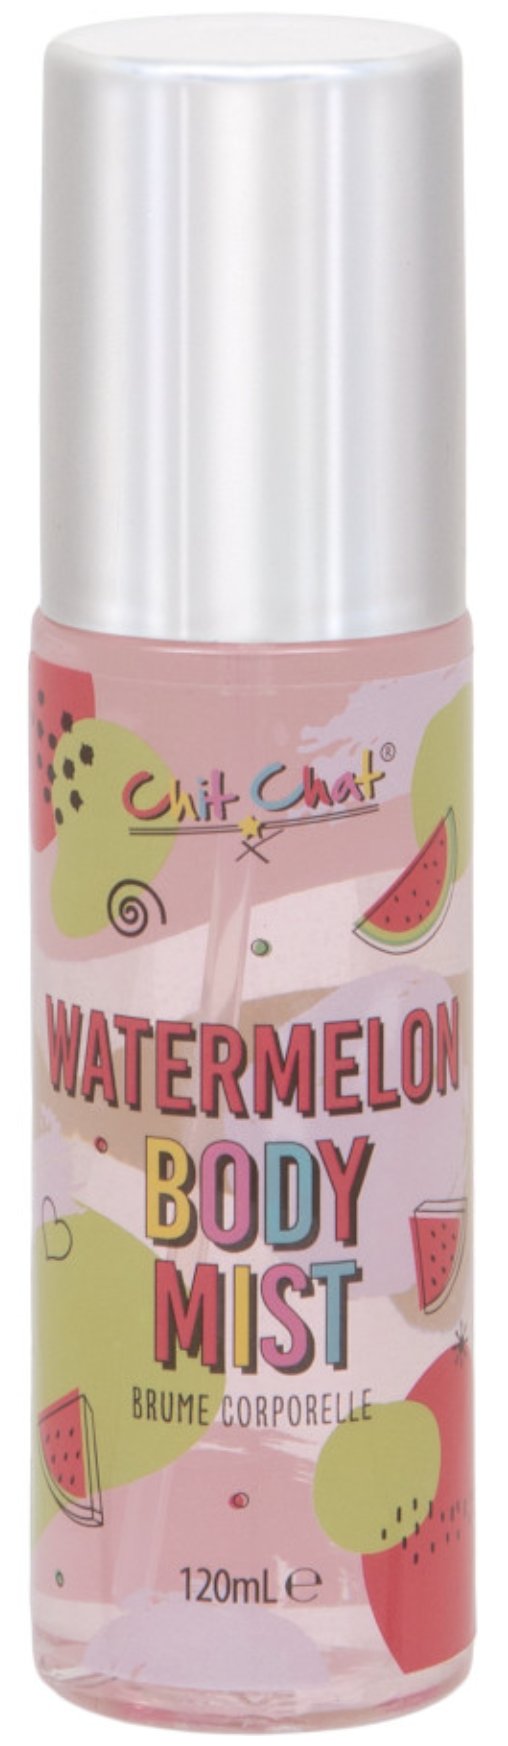 Chit Chat Body Mist Watermelon